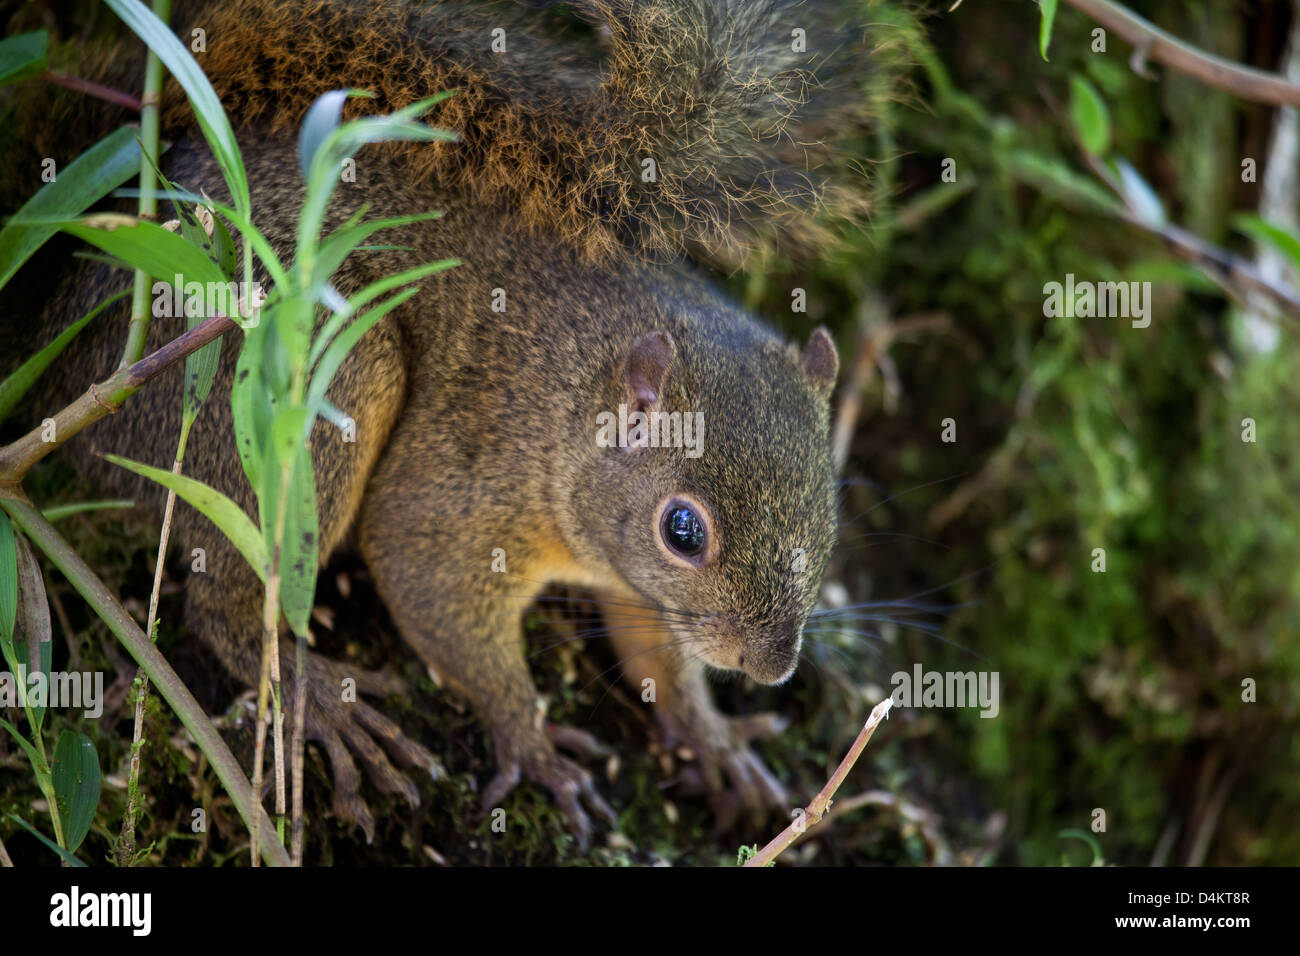 Montane Squirrel, Syntheosciurus brochus, near Los Quetzales lodge, La Amistad national park, Chiriqui province, Republic of Panama. Stock Photo